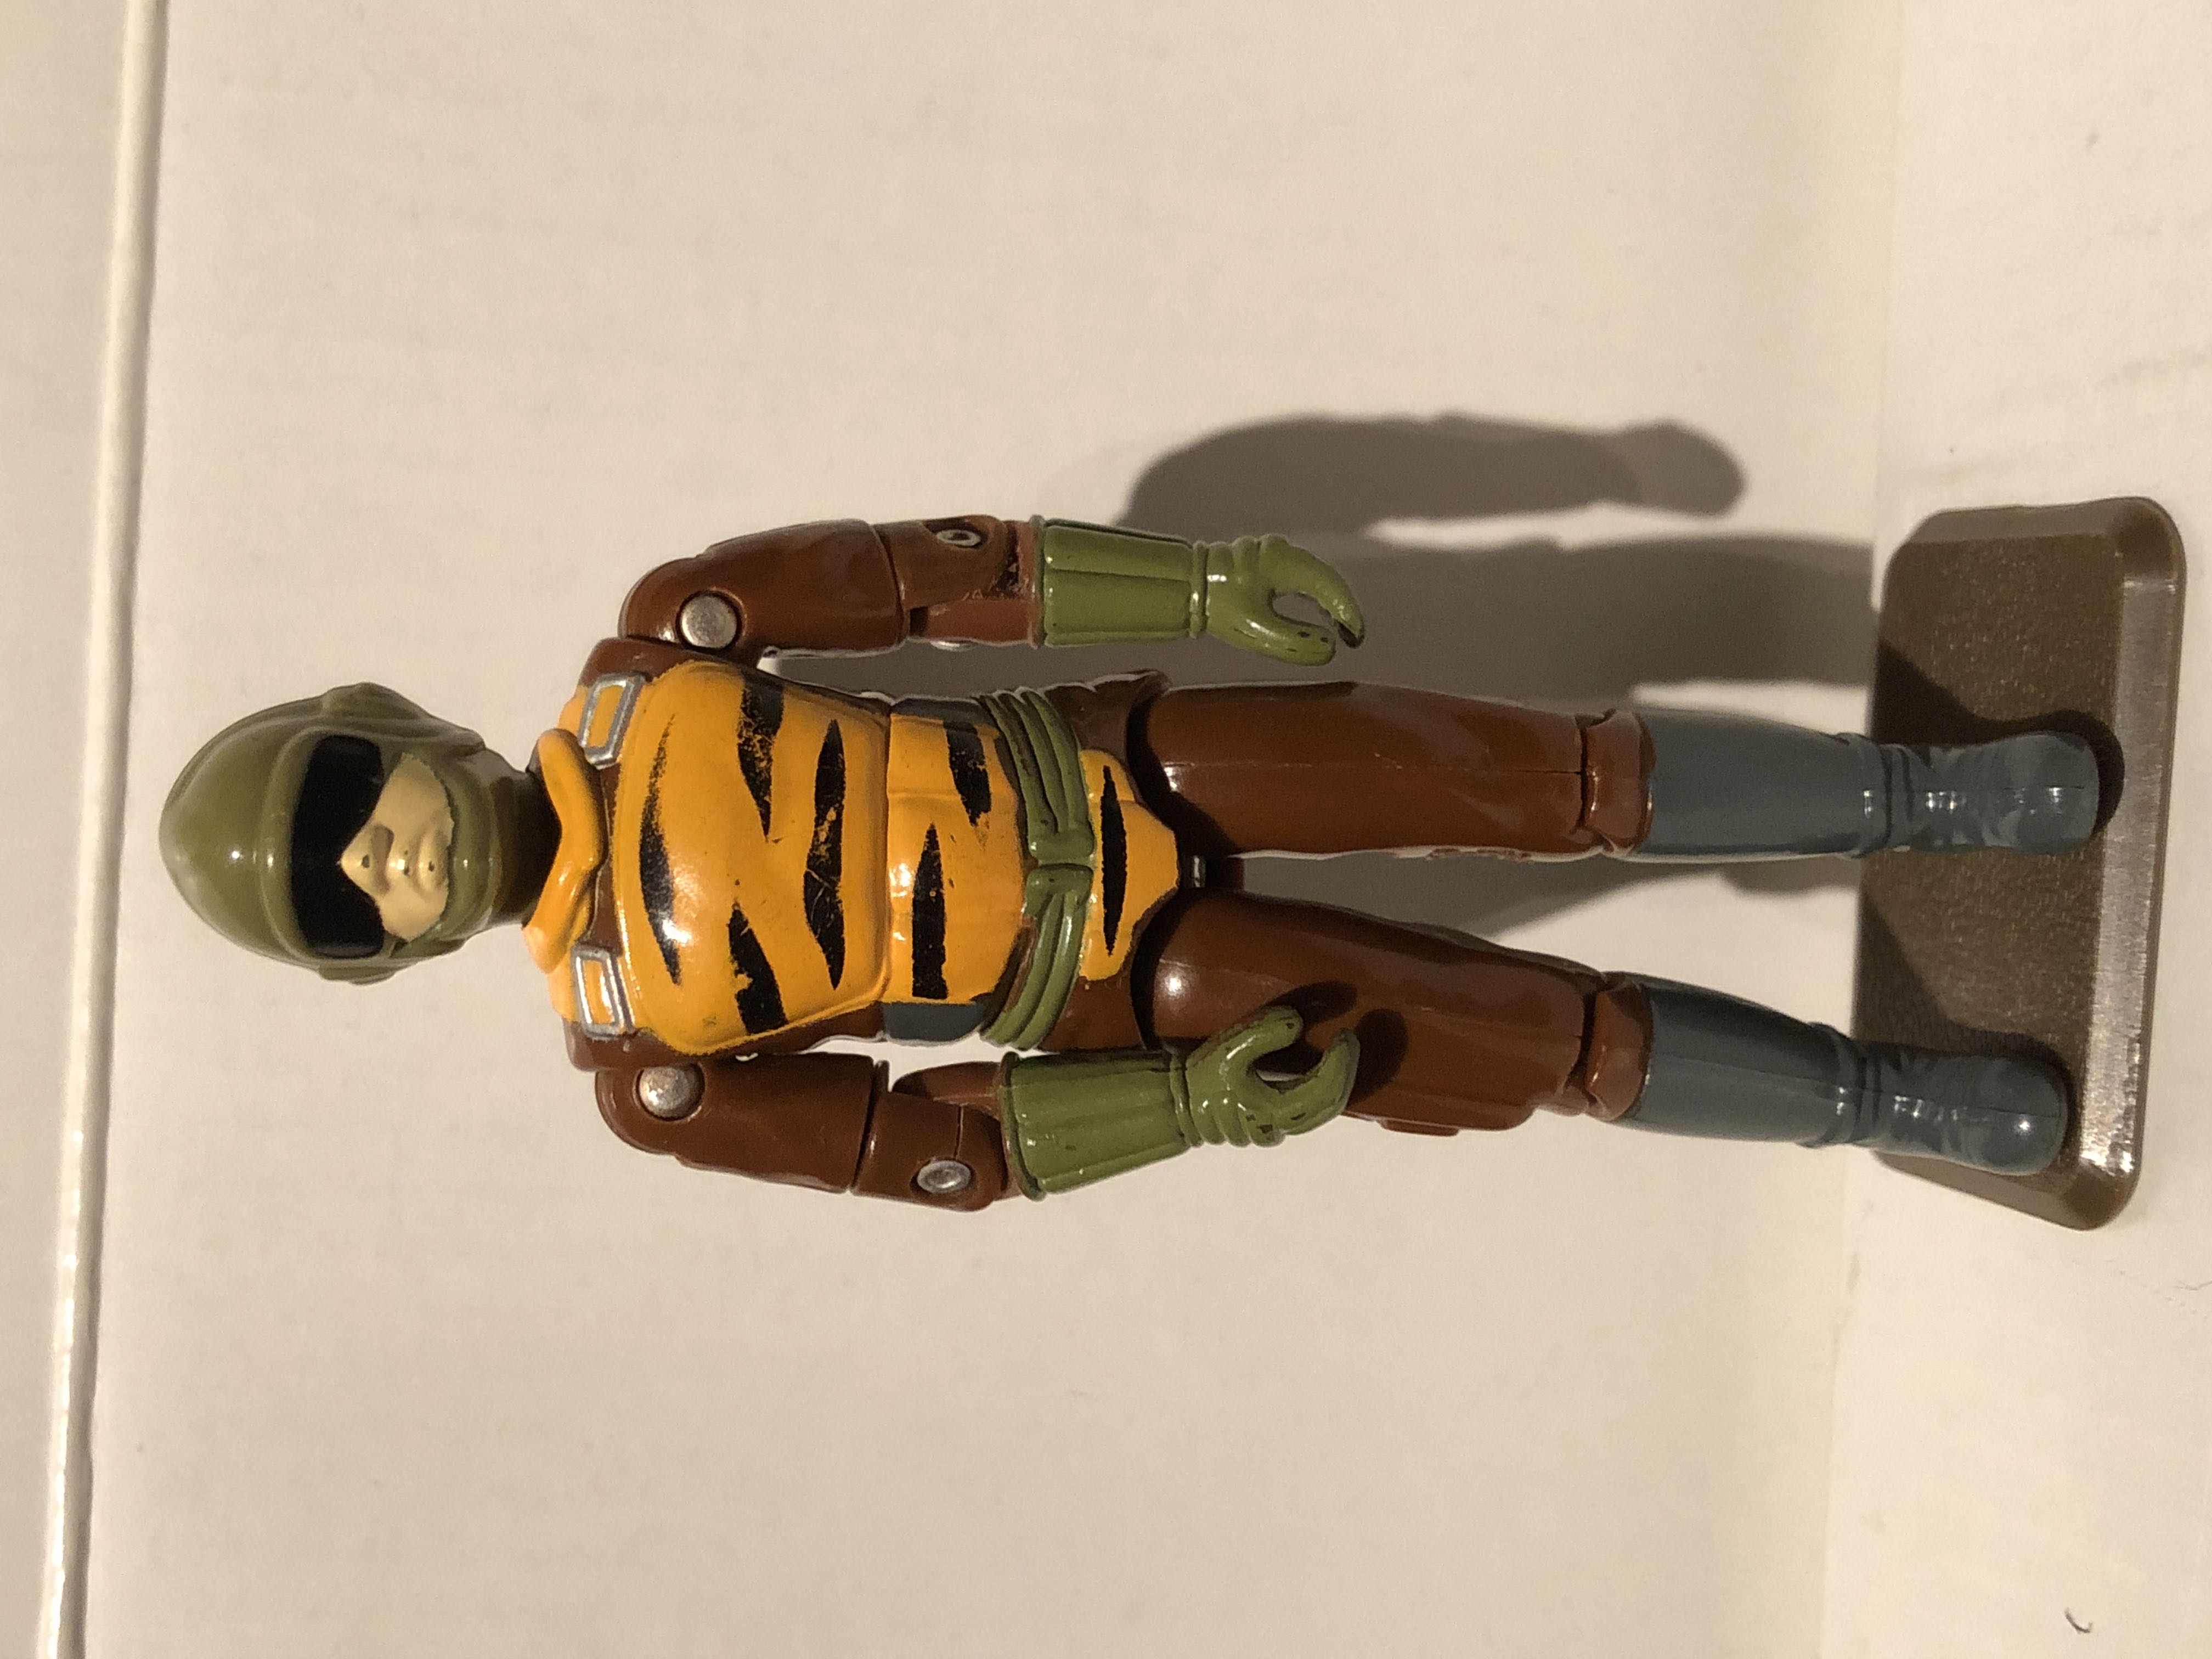 Tripwire [v3 - Tiger Force] - Hasbro (G.I. Joe - A Real American Hero) action figure collectible - Main Image 1